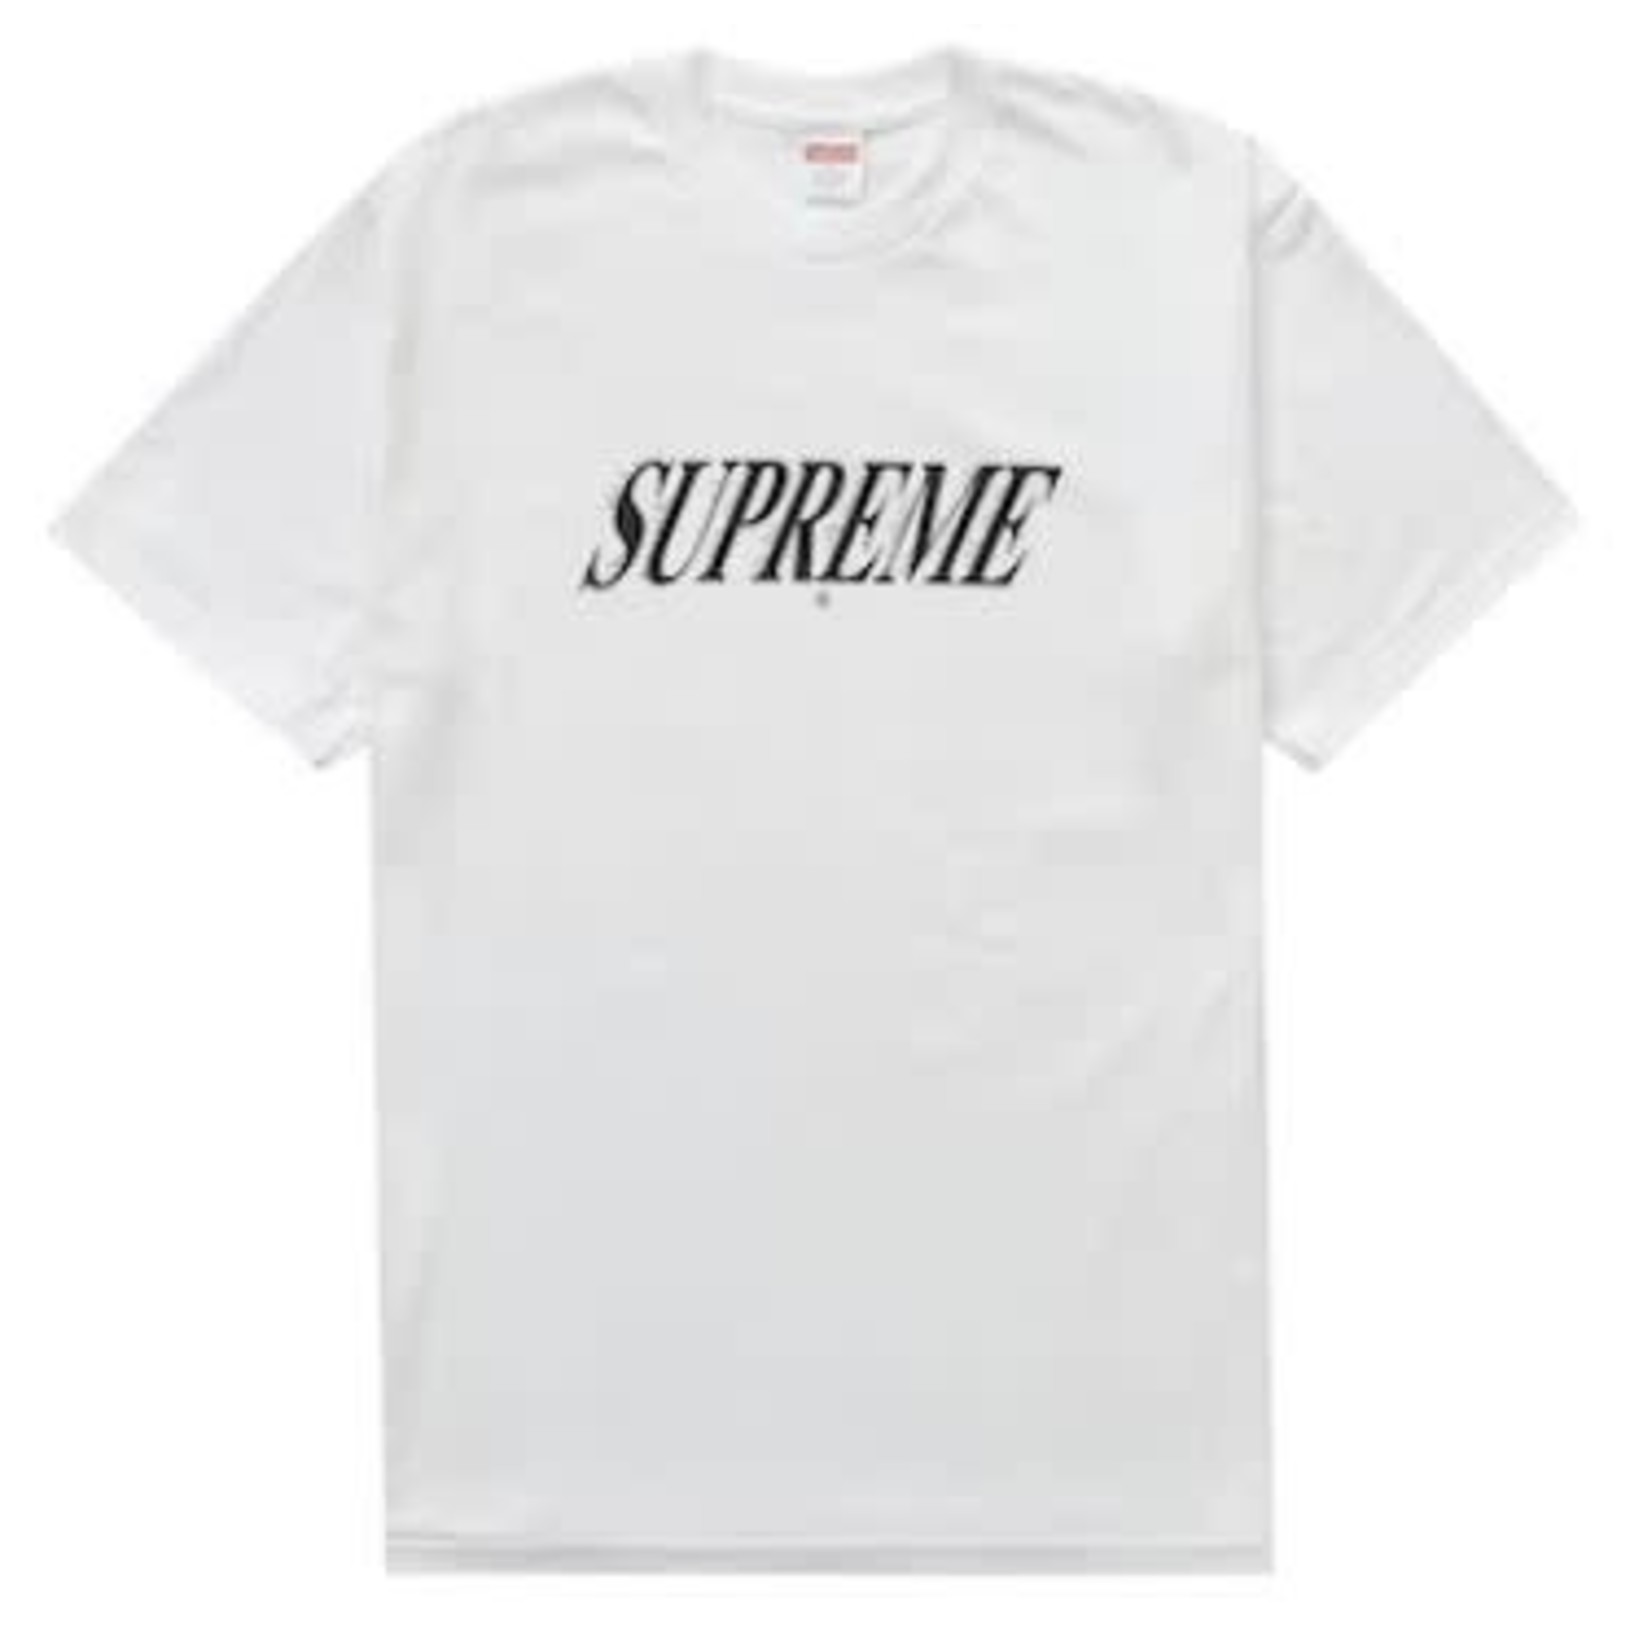 Supreme Supreme Slap Shot Tee White Size XLarge, DS BRAND NEW